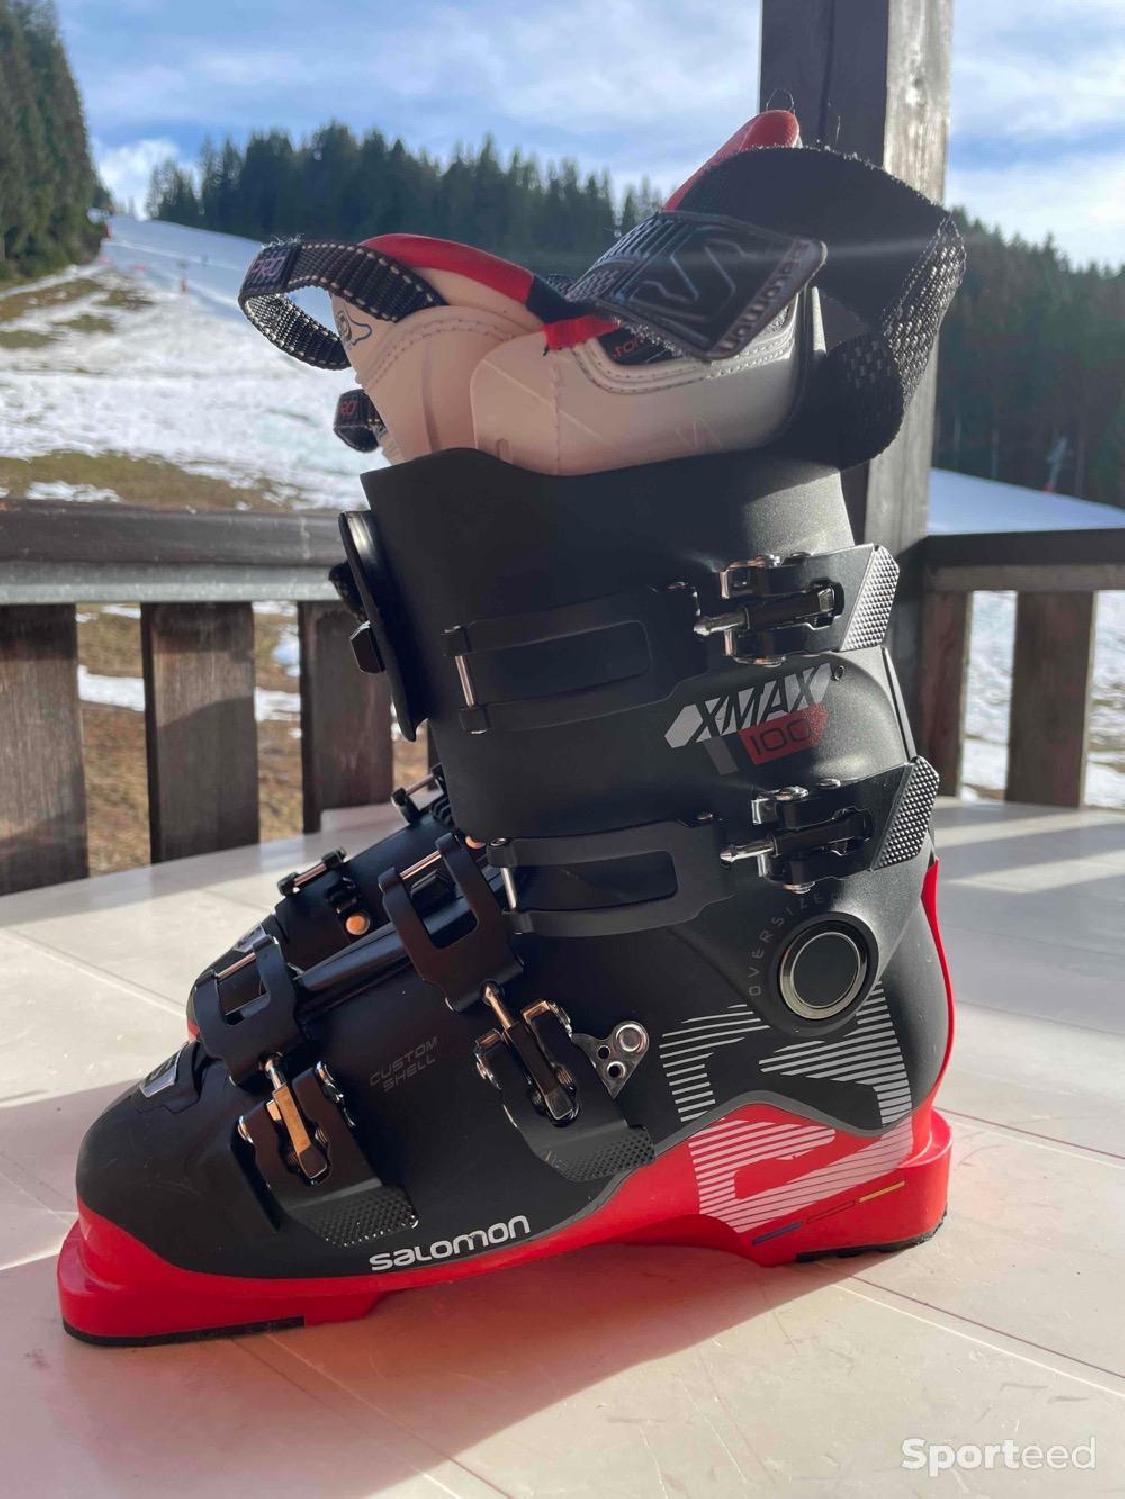 Acheter Chaussures Ski Homme Occasion Et Neuf